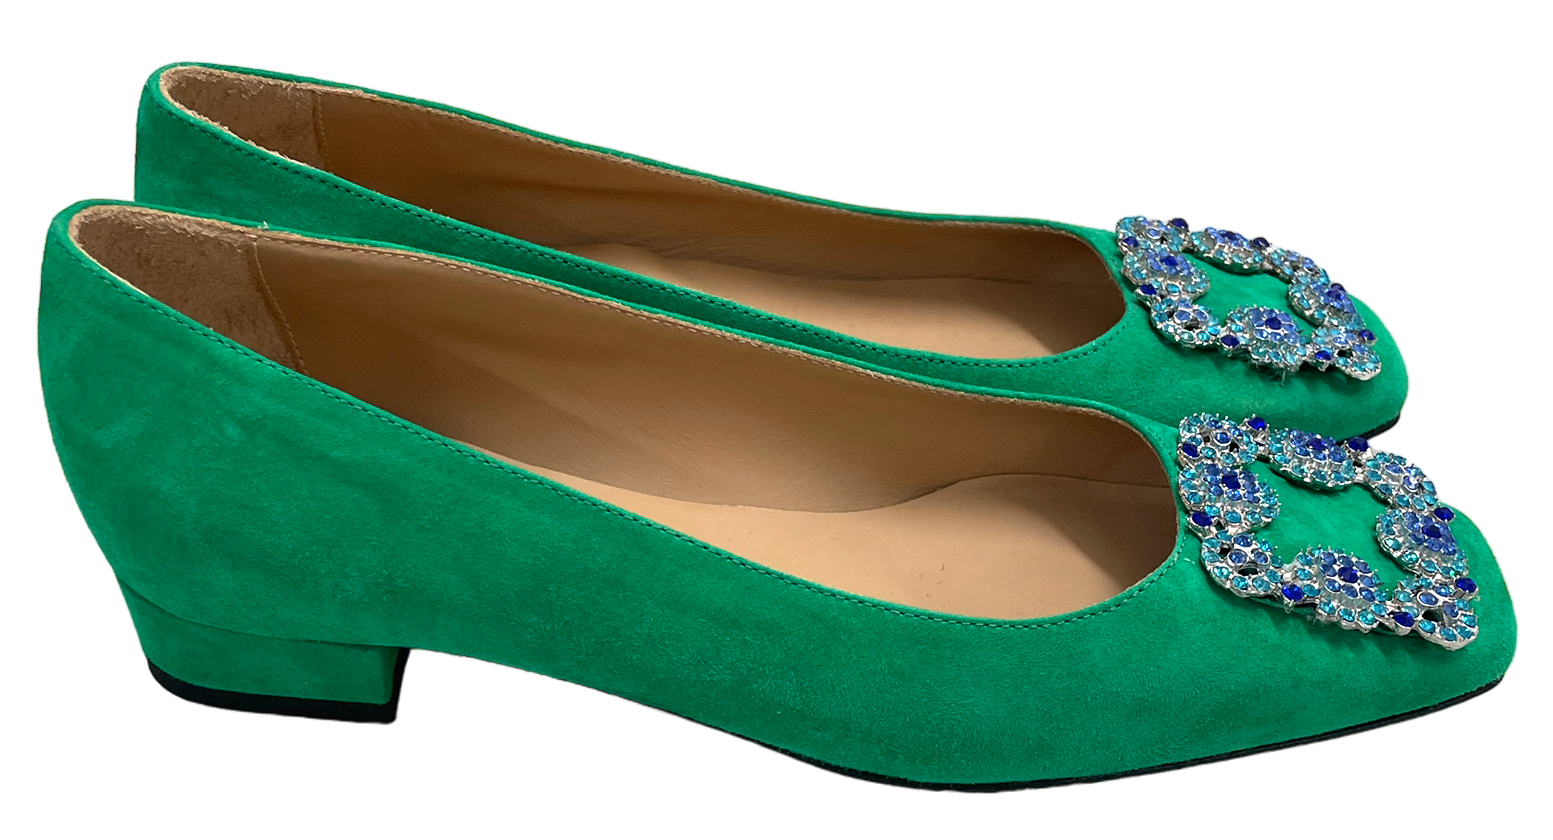 Ann Mashburn Buckle Shoe in Green Suede